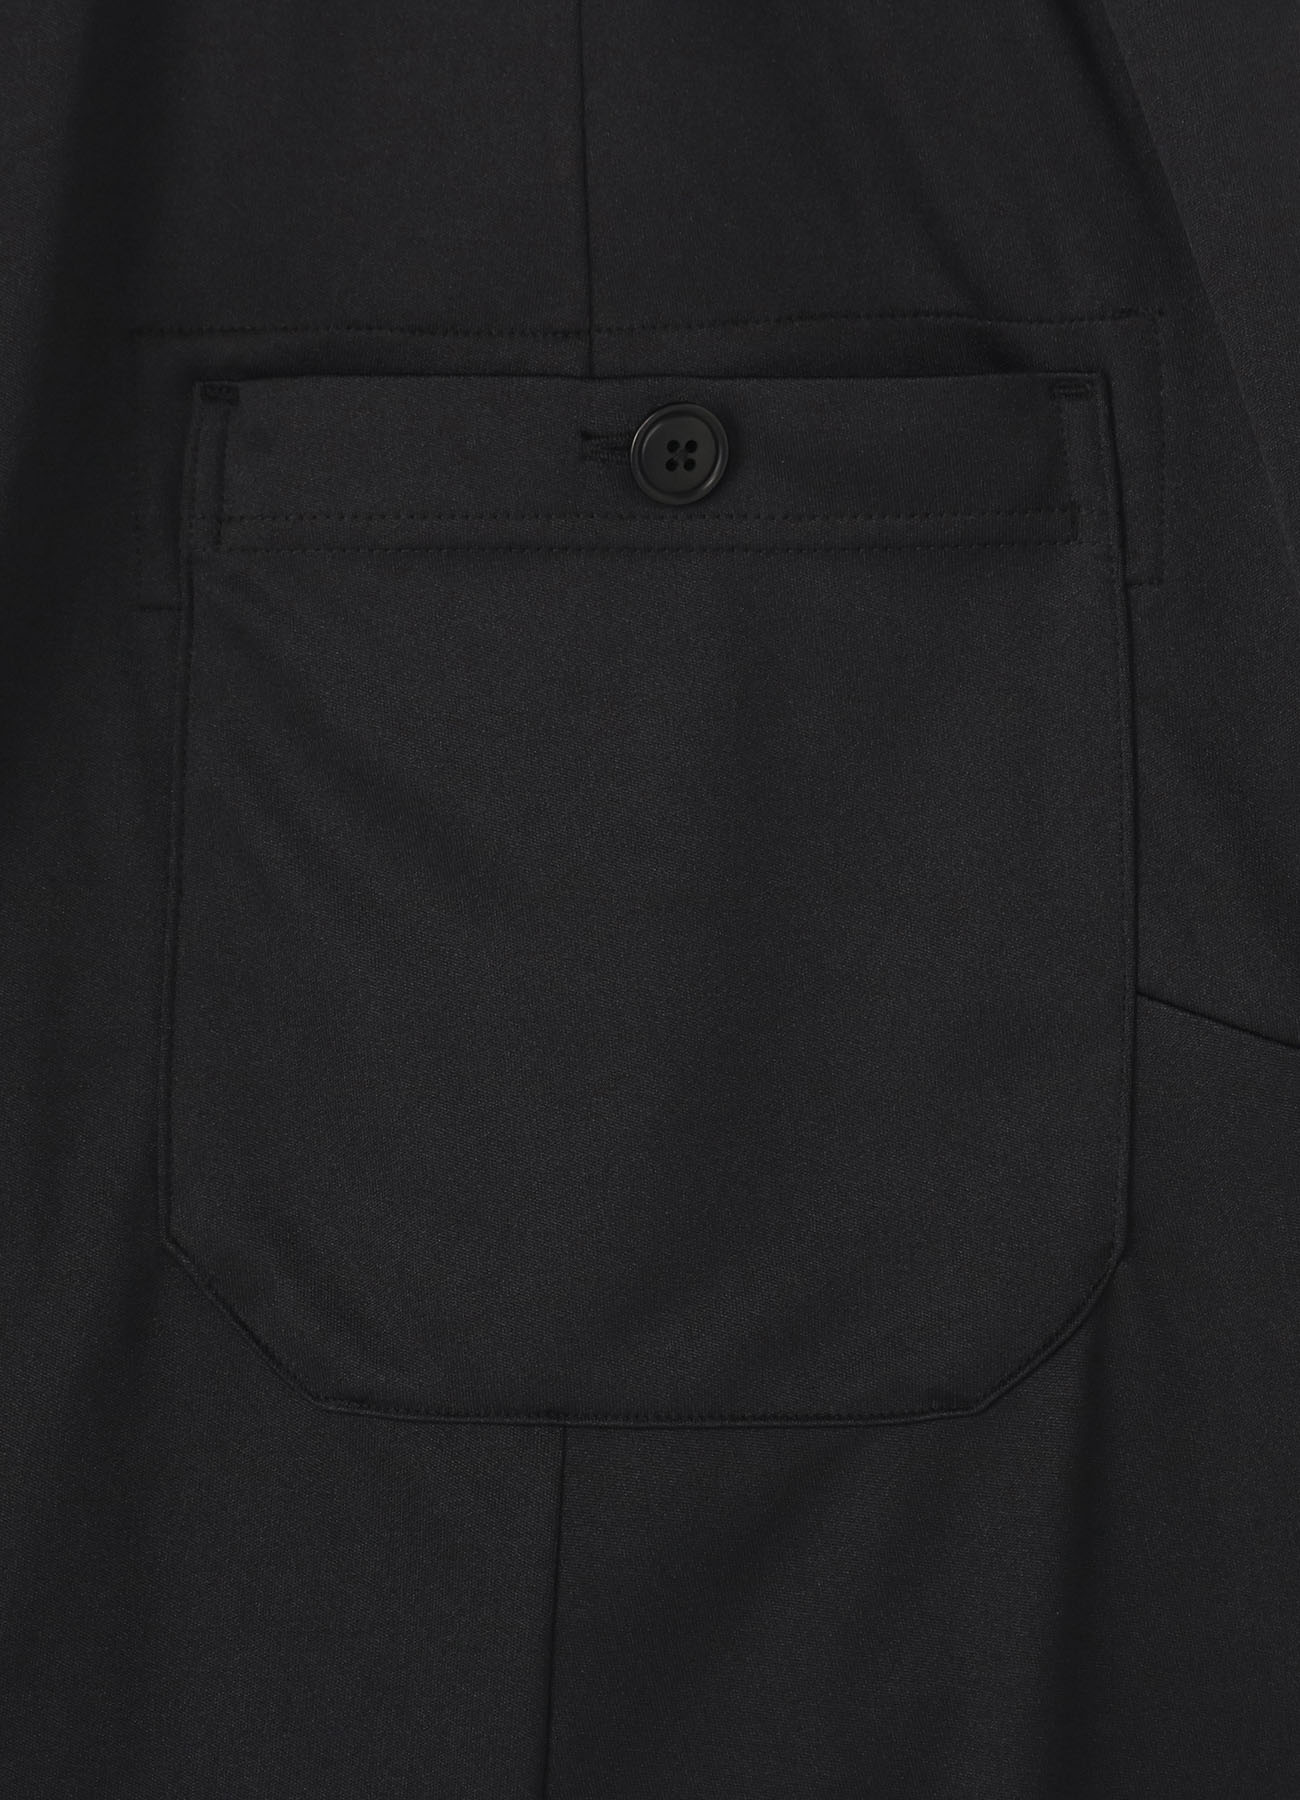 Thin Smooth Jersey Switching Seam Fastener Pocket 6-quarter-length Saruel Pants